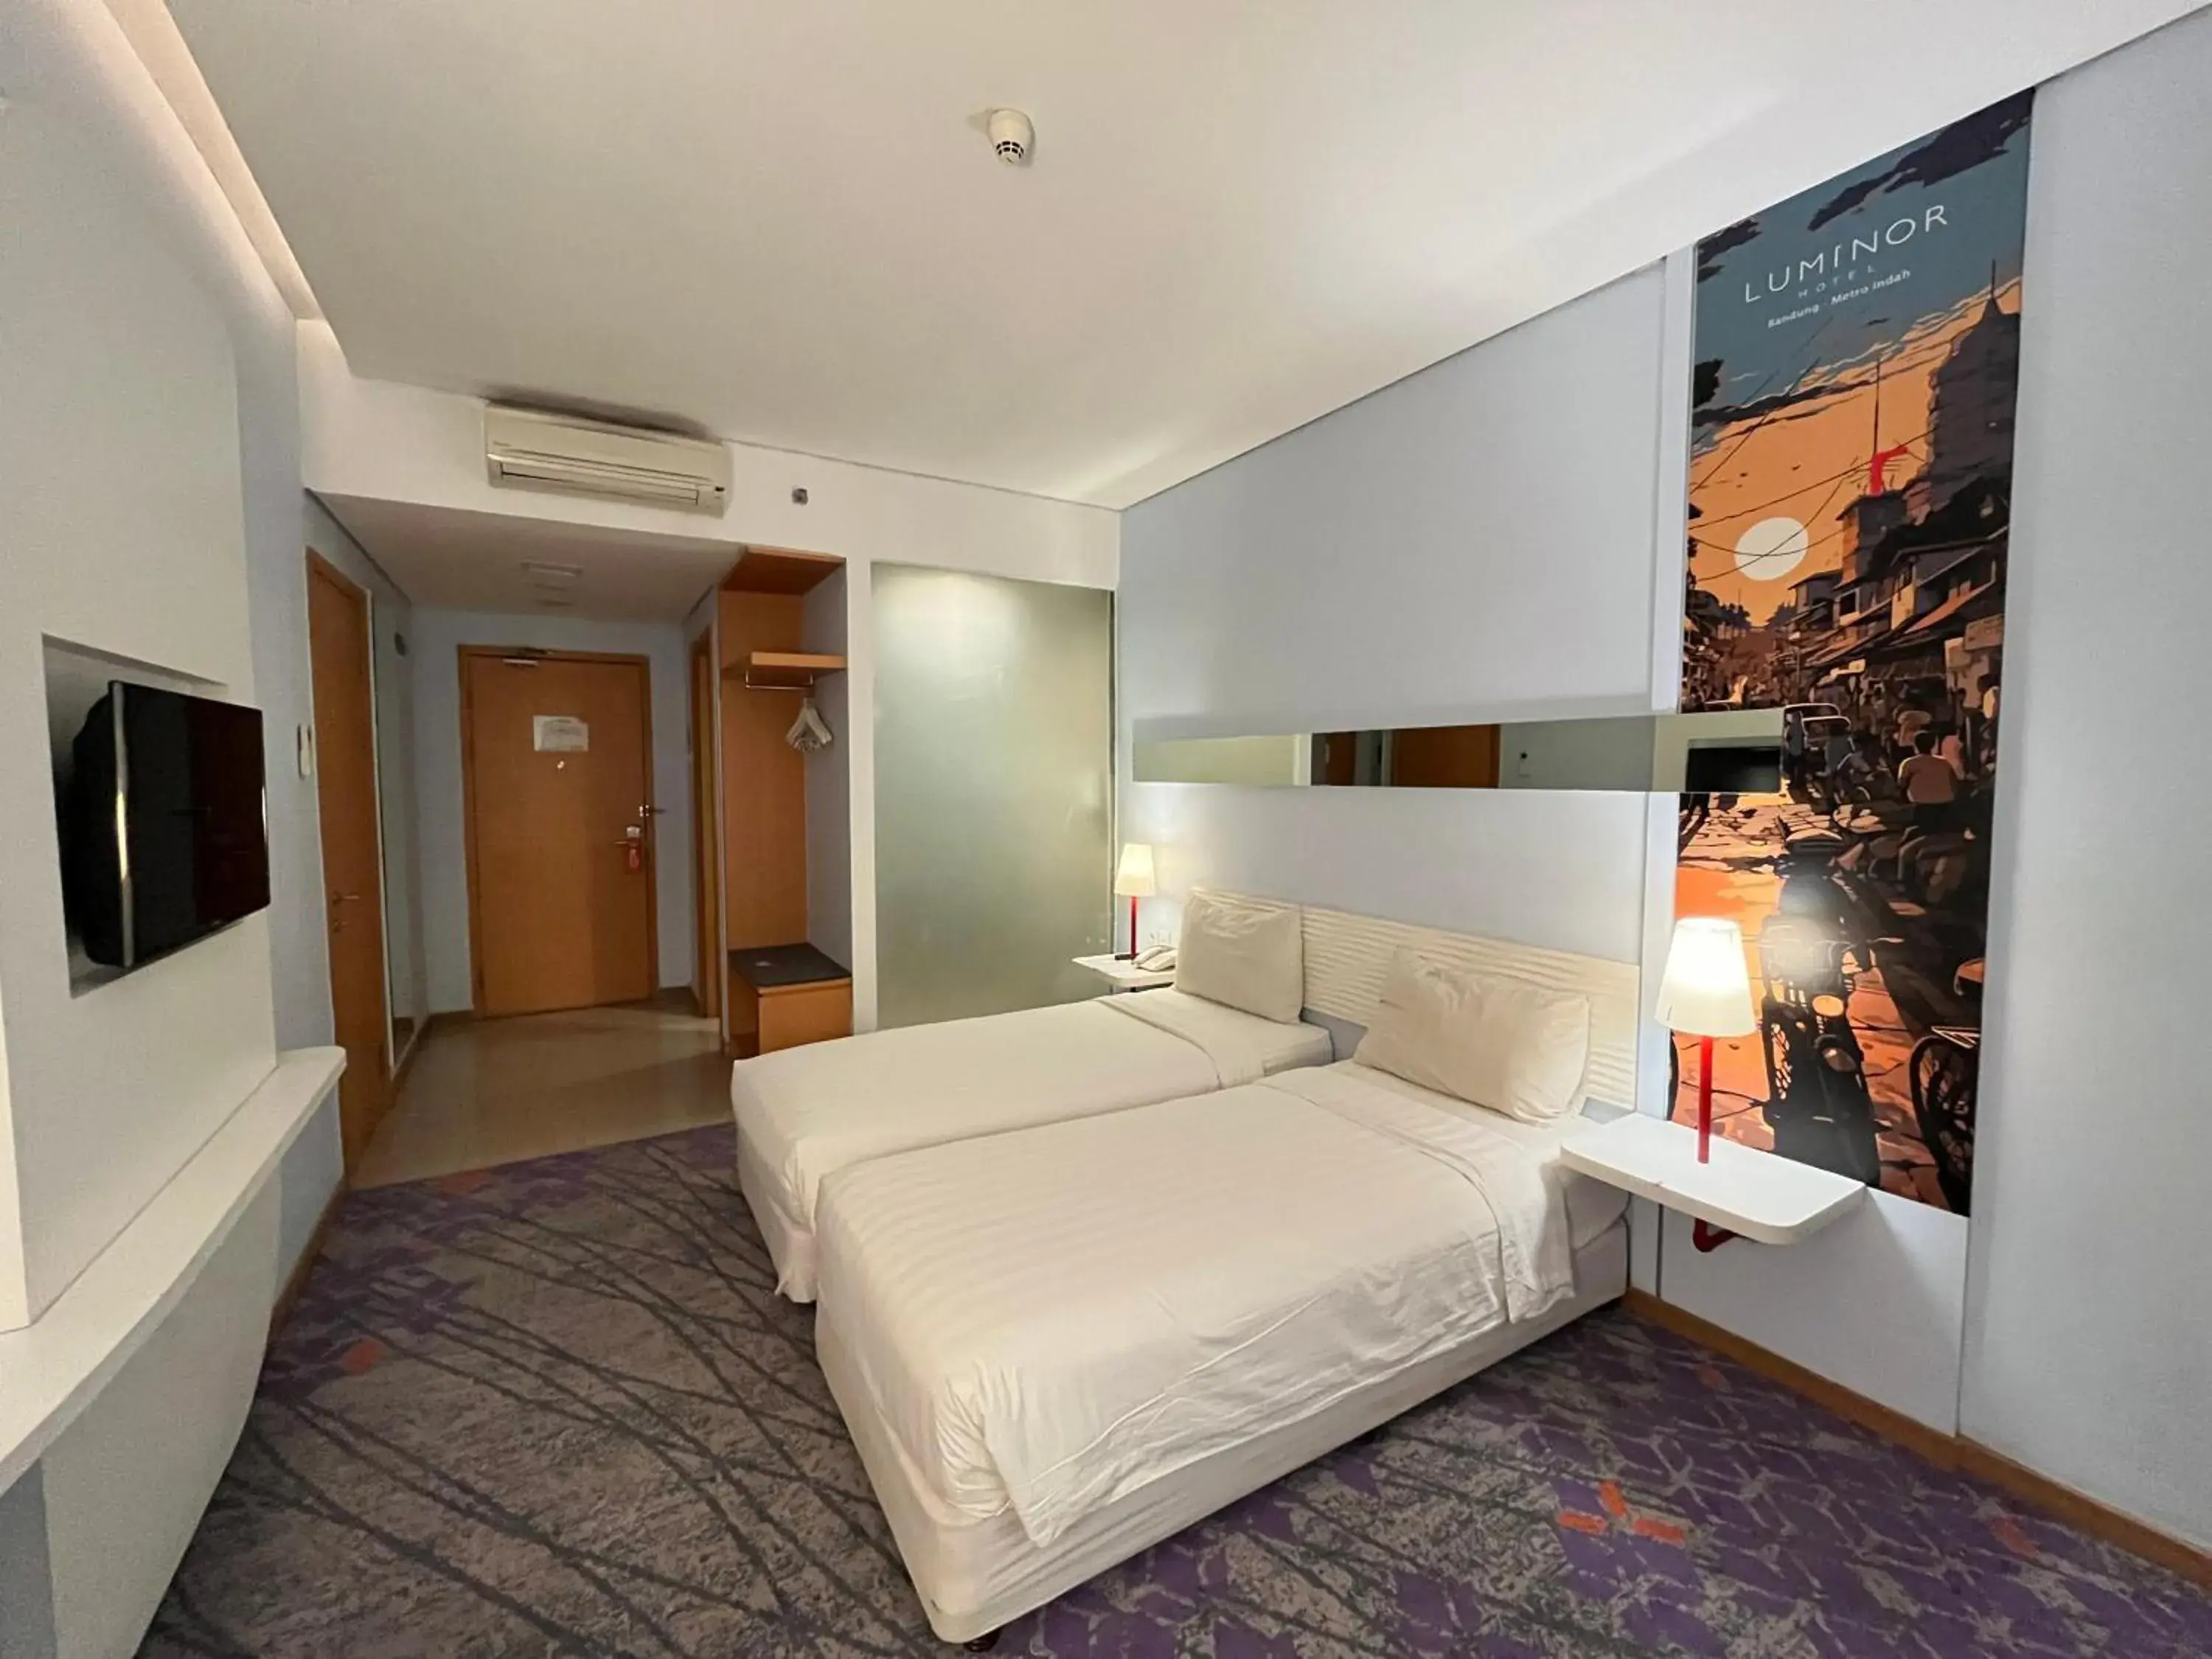 Bedroom in Luminor Hotel Metro Indah - Bandung by WH